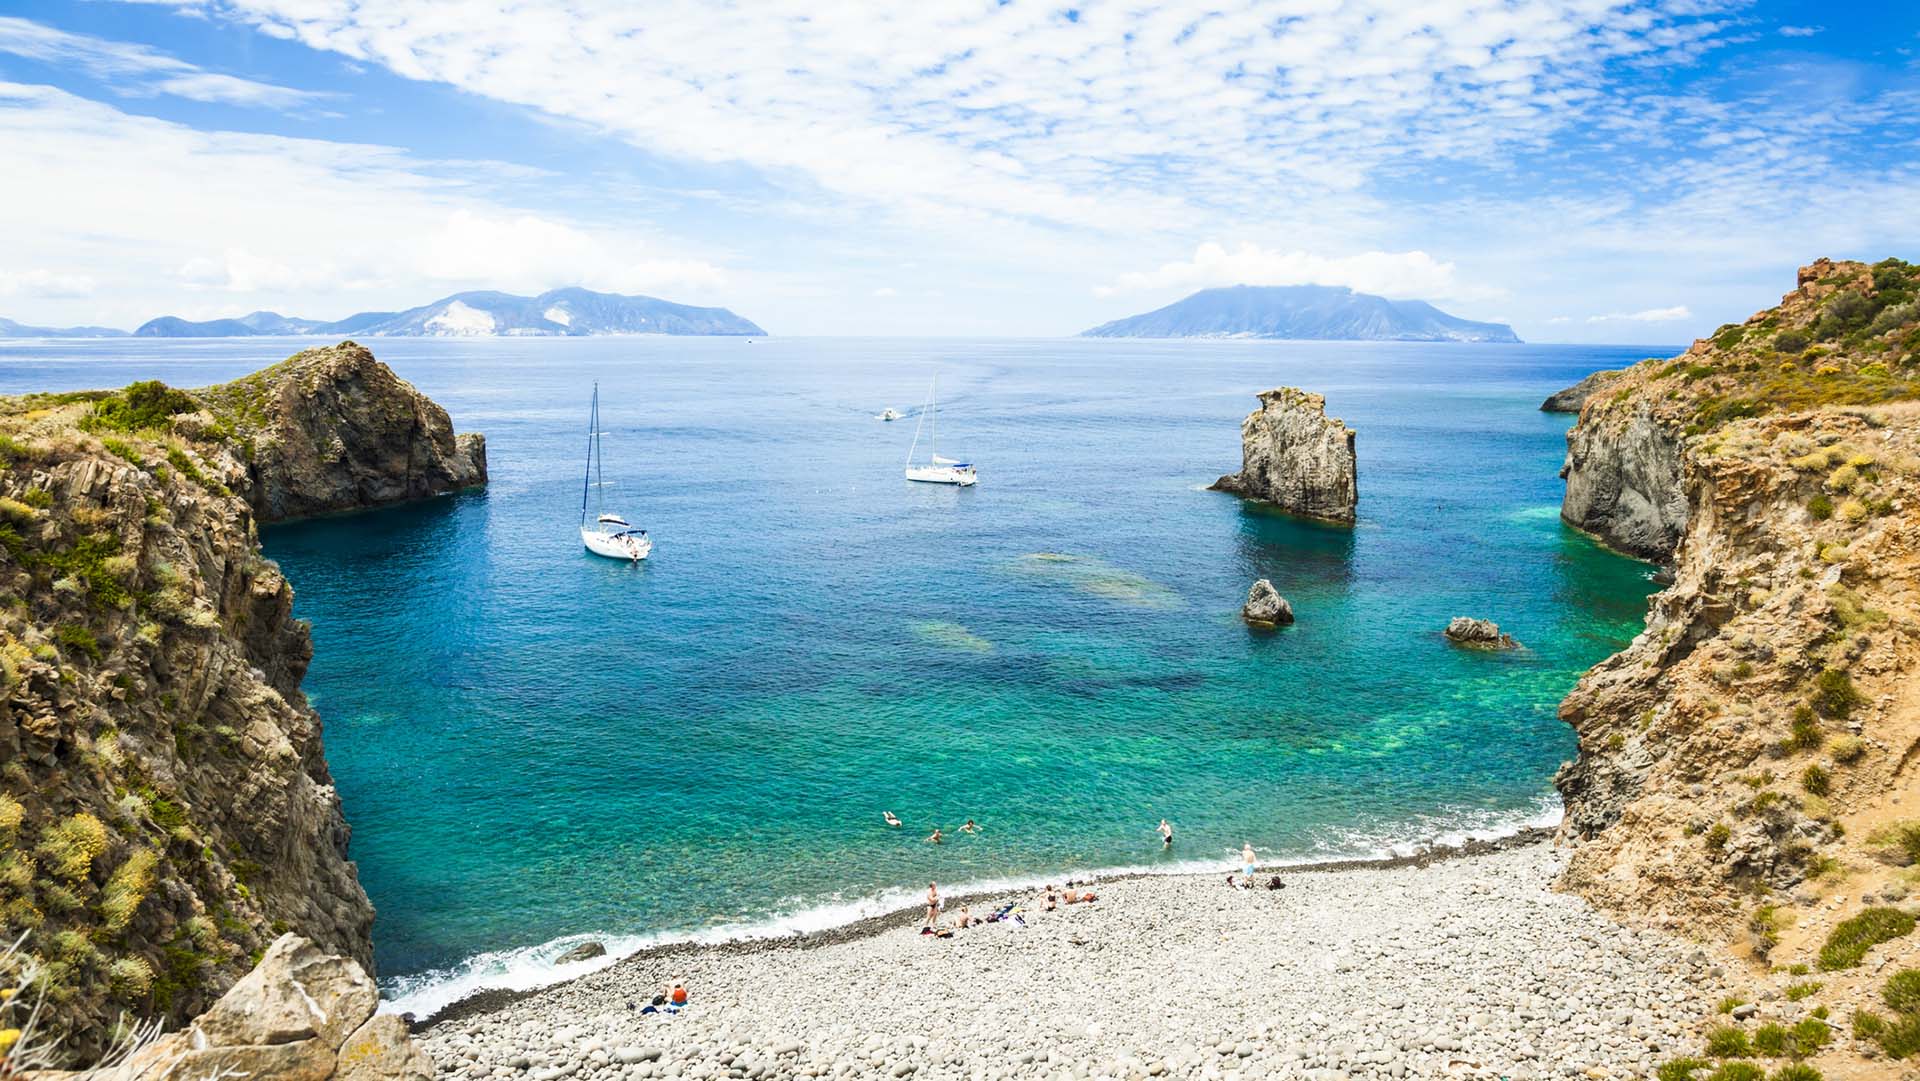 Cala Junco - small bay of Panarea - one of Aeolian Islands near Sicily (Italy). Lipari and Salina islands visible on the horizon.